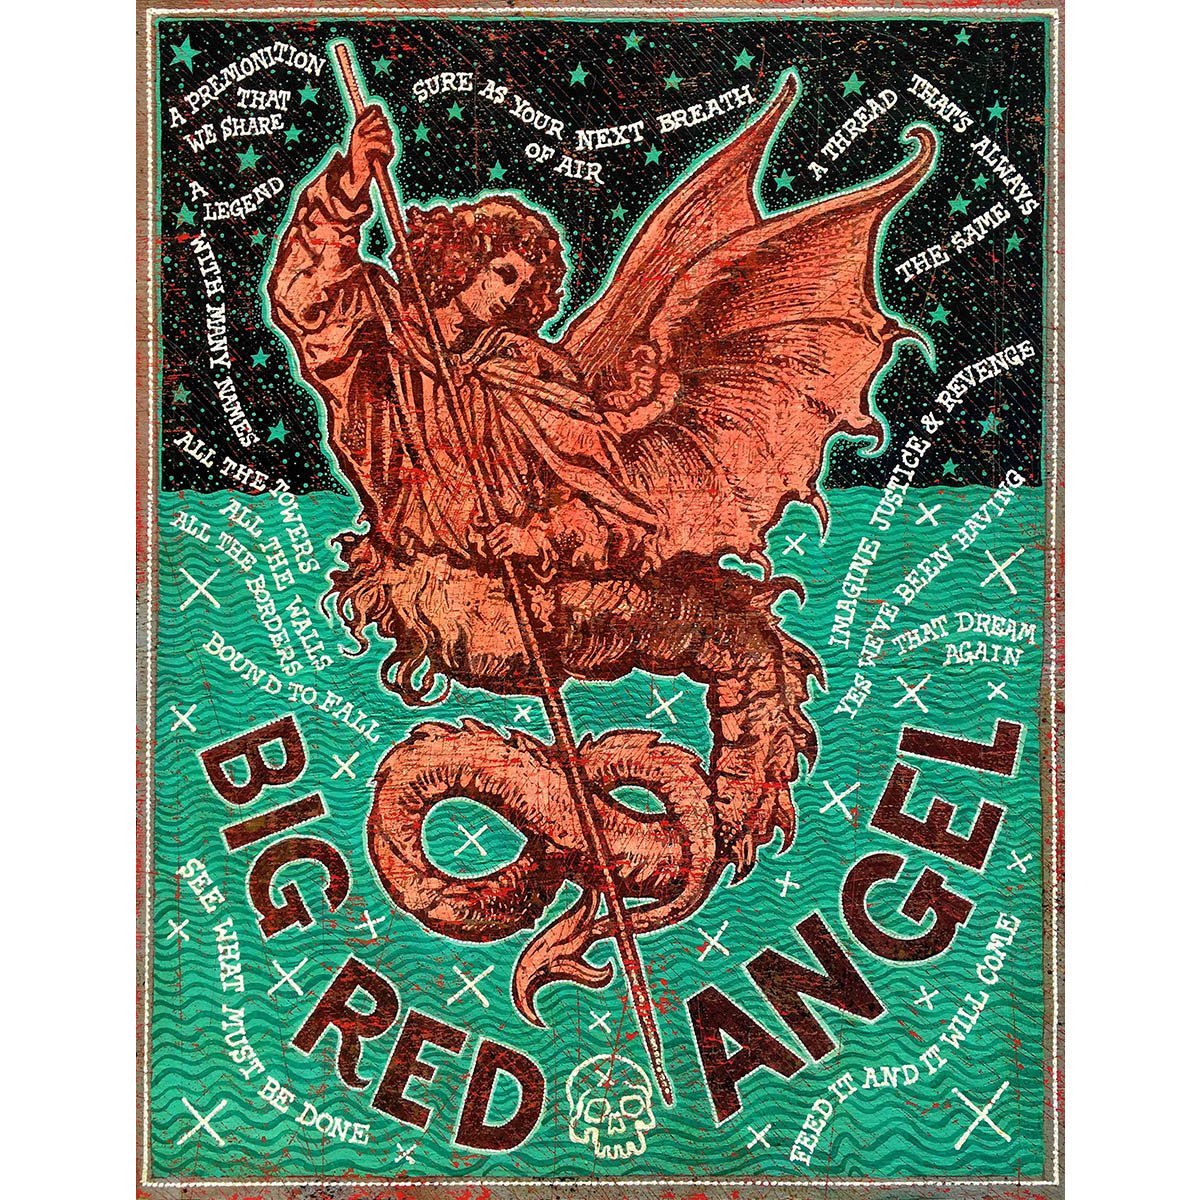 Big Red Angel - Large Print Jon Langford